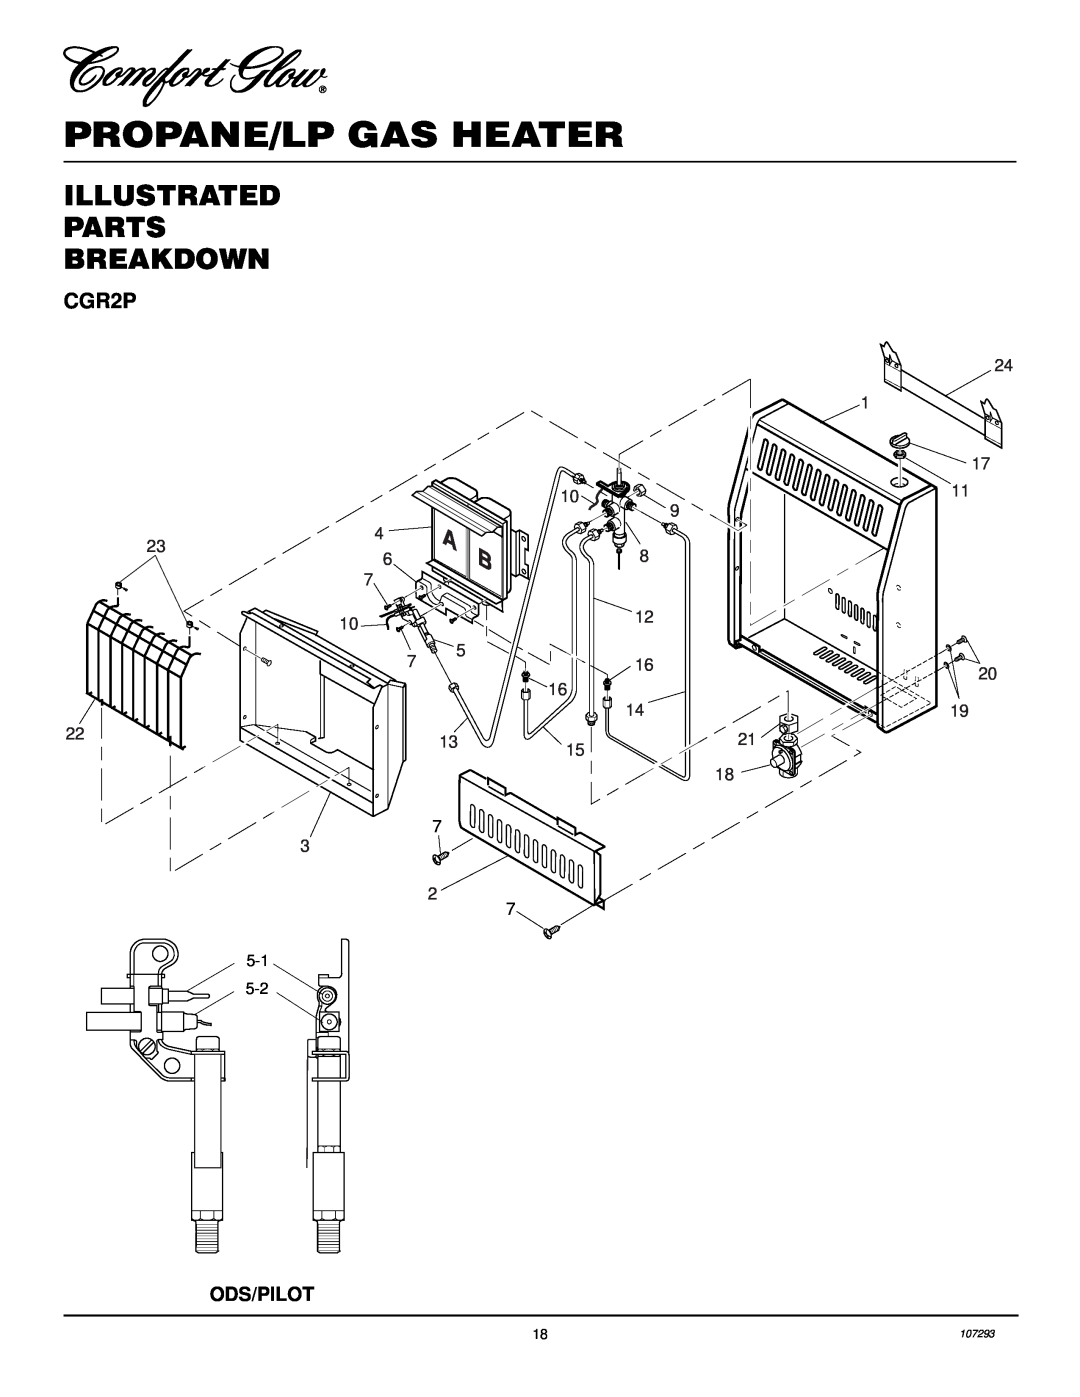 Desa CGR2P installation manual Illustrated Parts Breakdown, Propane/Lp Gas Heater 